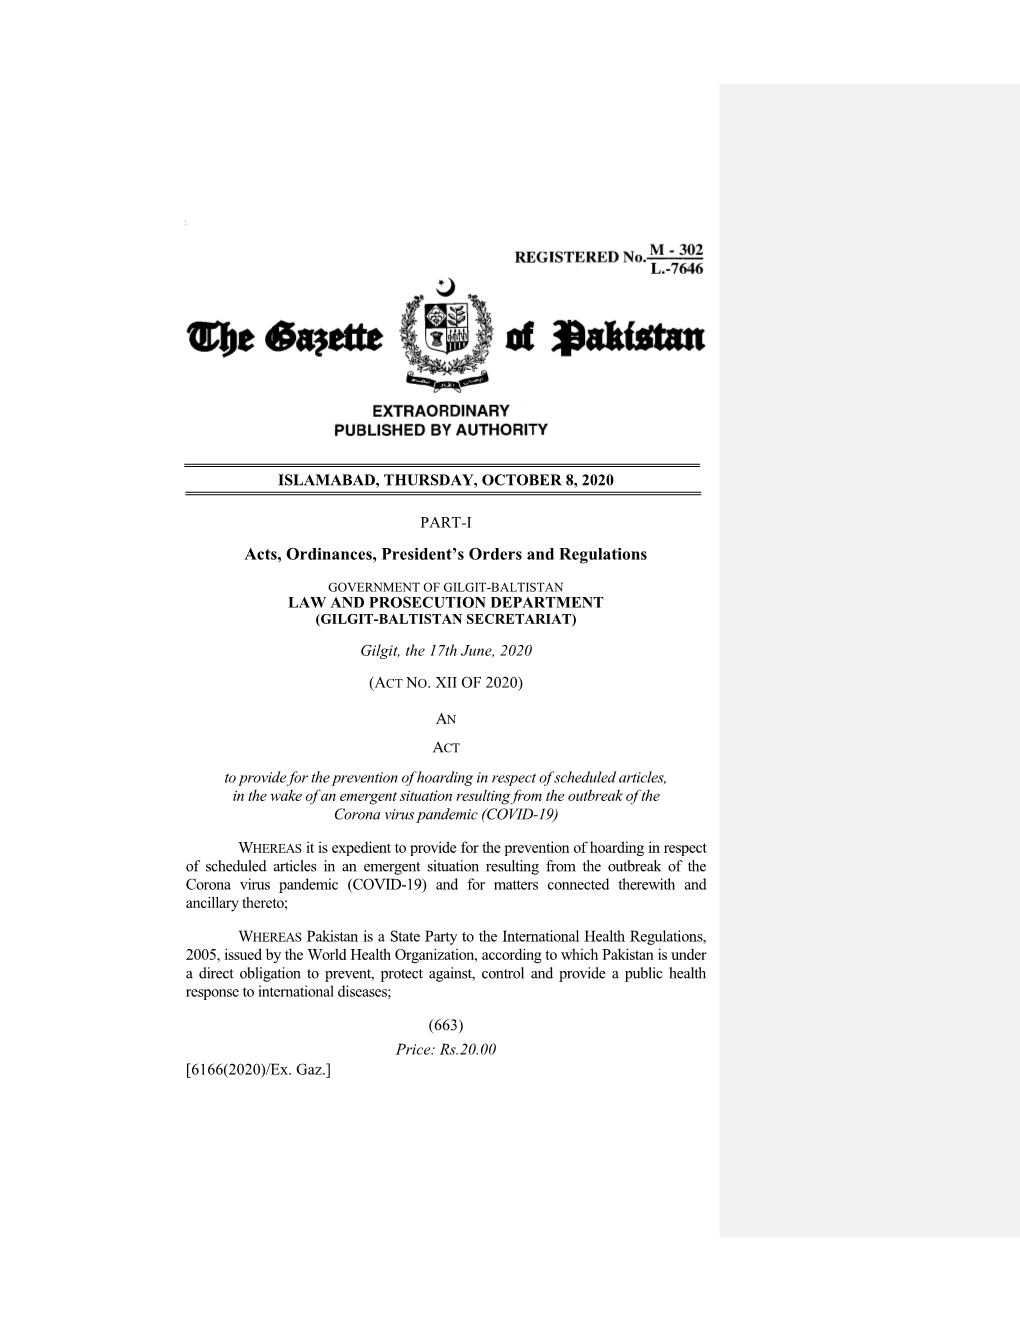 Part I] the Gazette of Pakistan, Extra., October 8, 2020 663